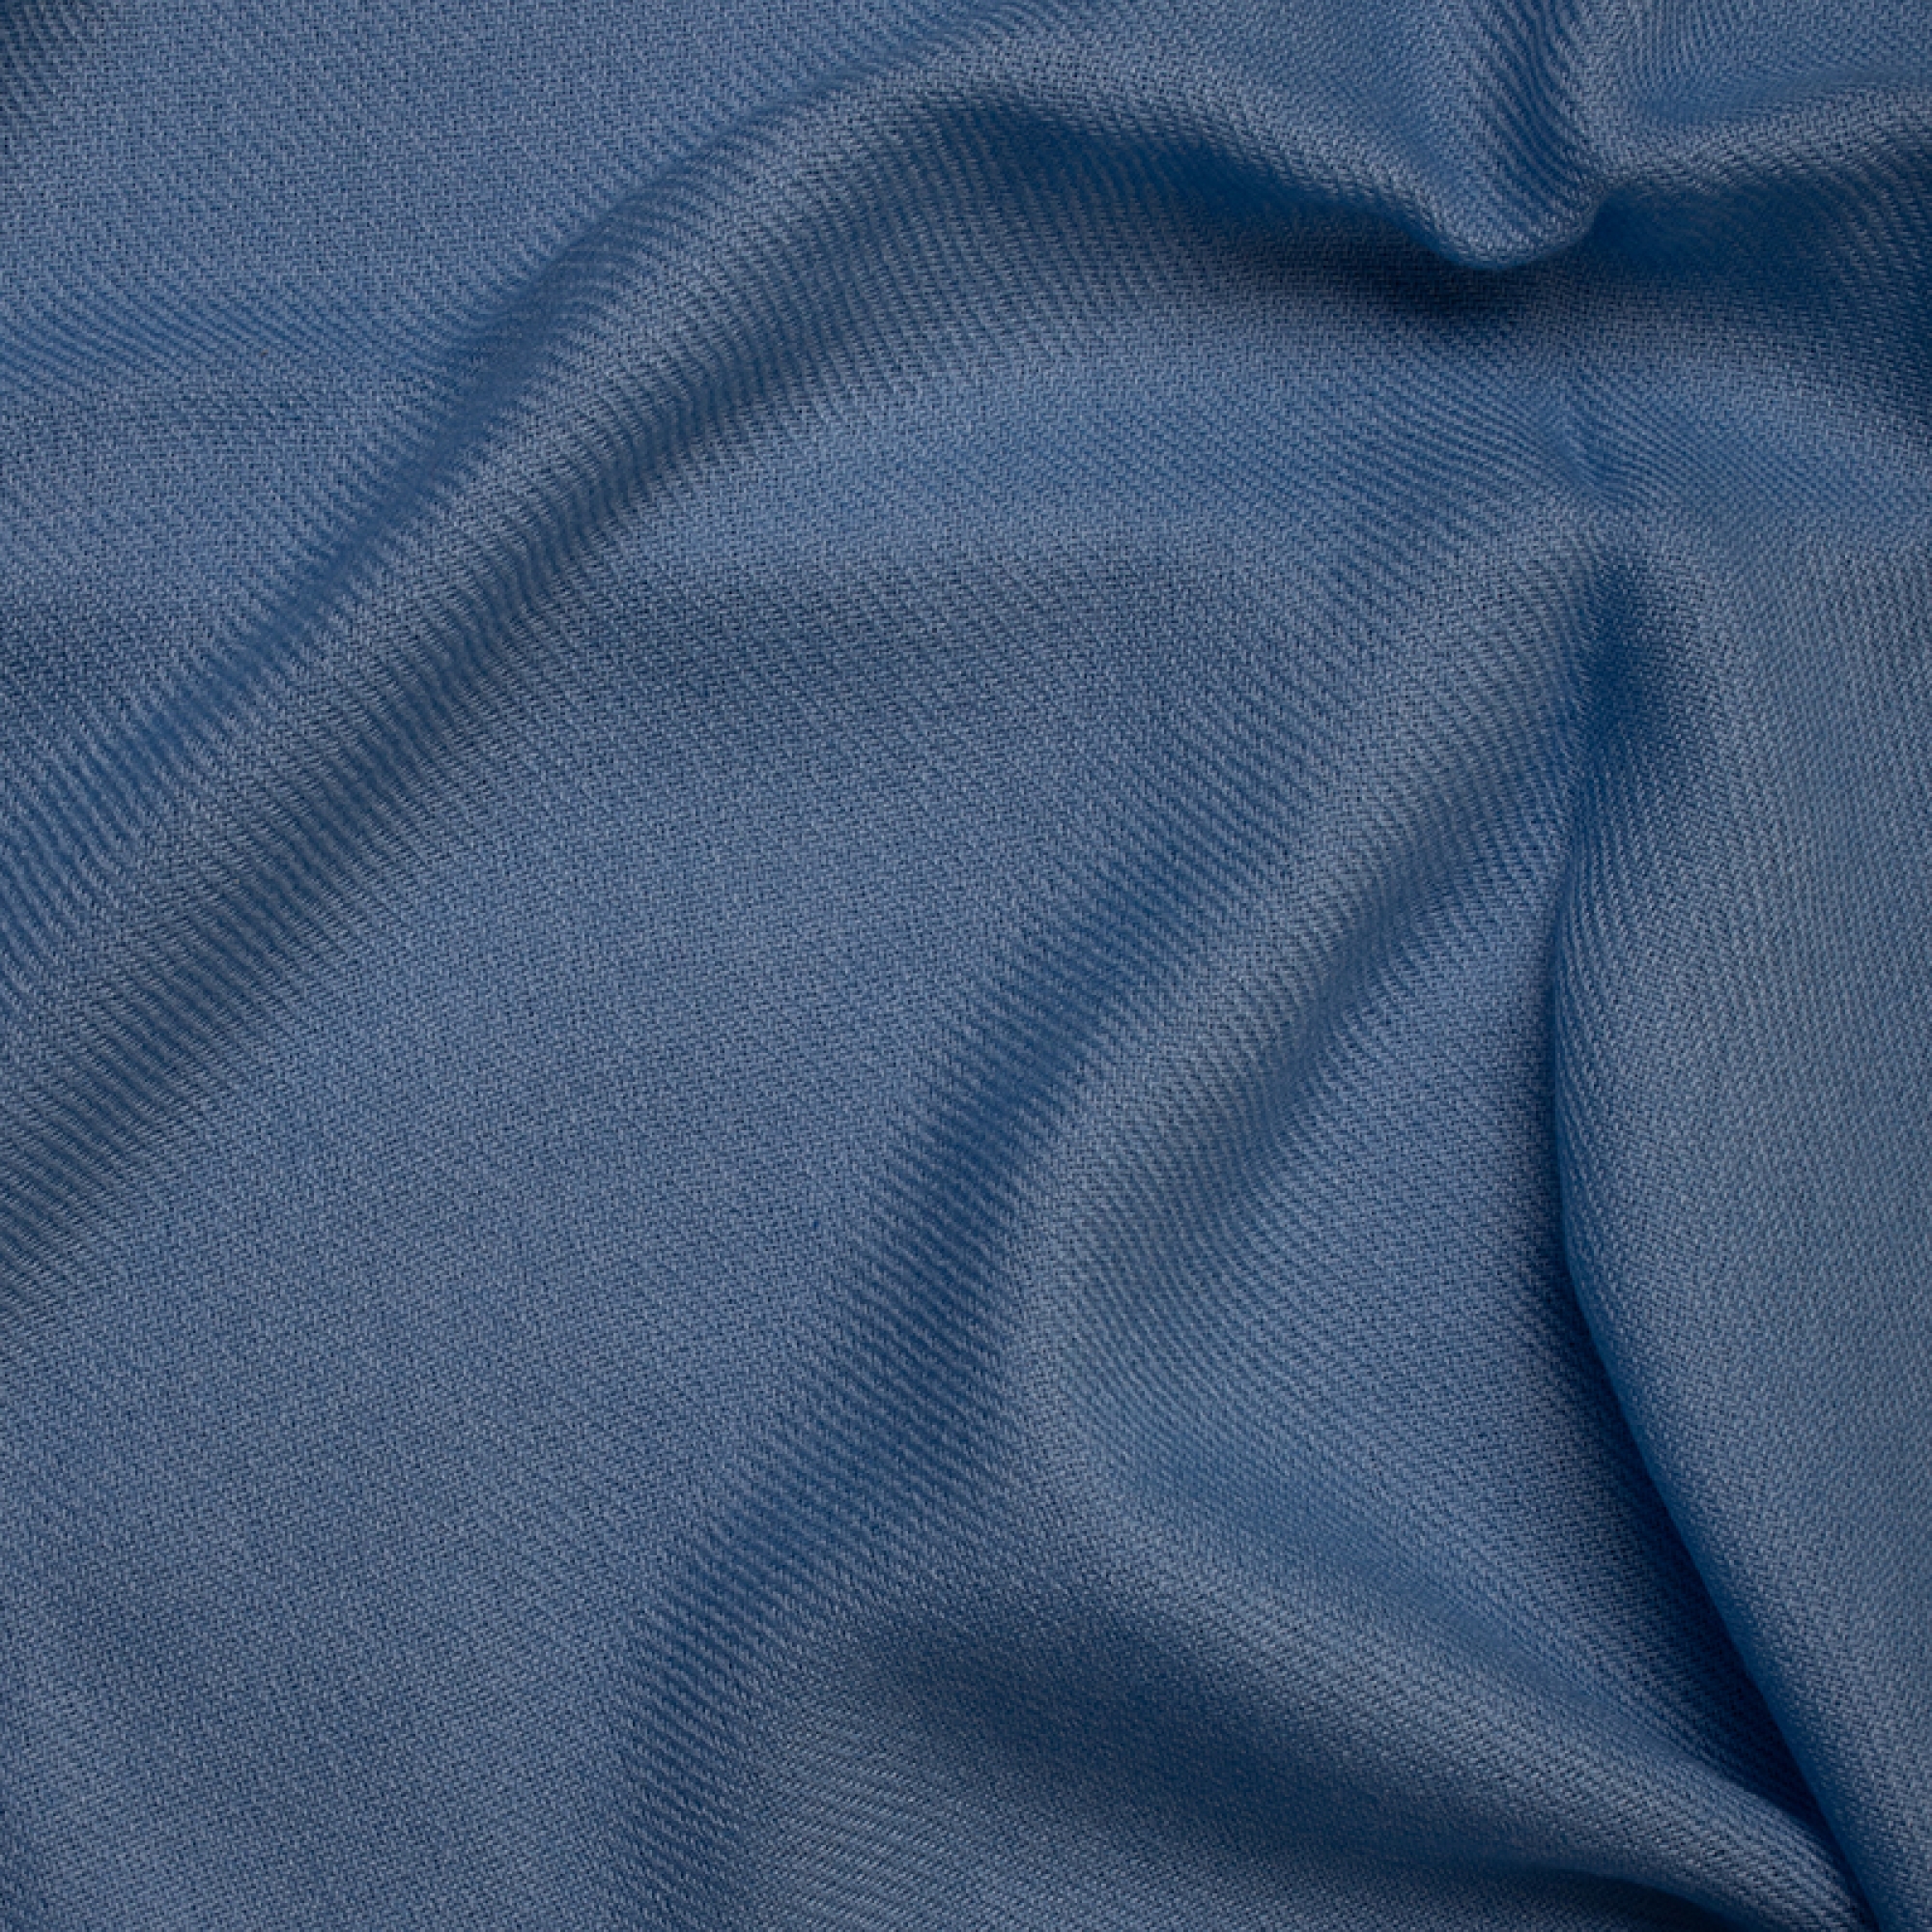 Cashmere accessories blanket toodoo plain l 220 x 220 little boy blue 220x220cm